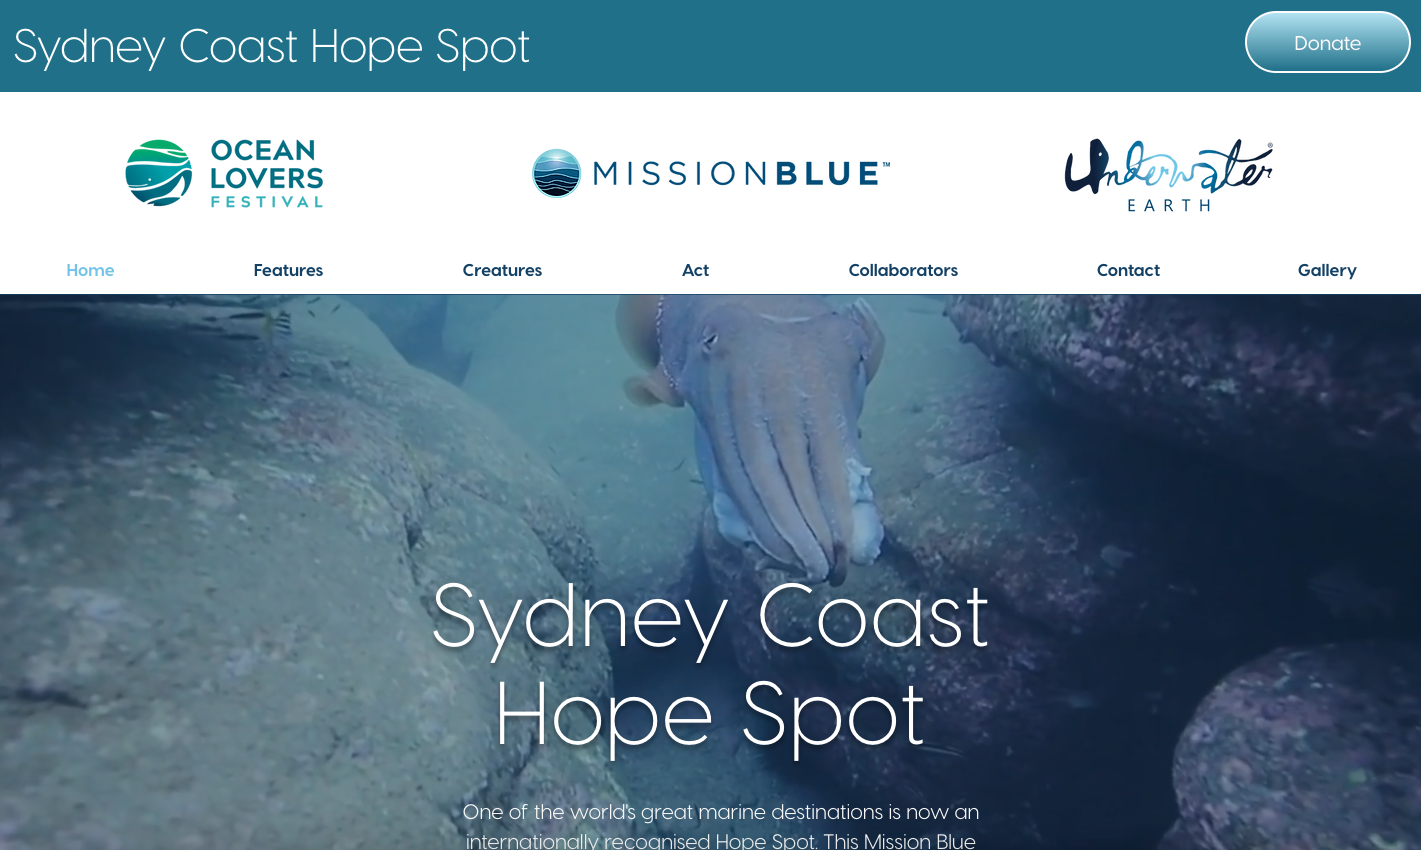 Sydney Coast Hope Spot website 3.png